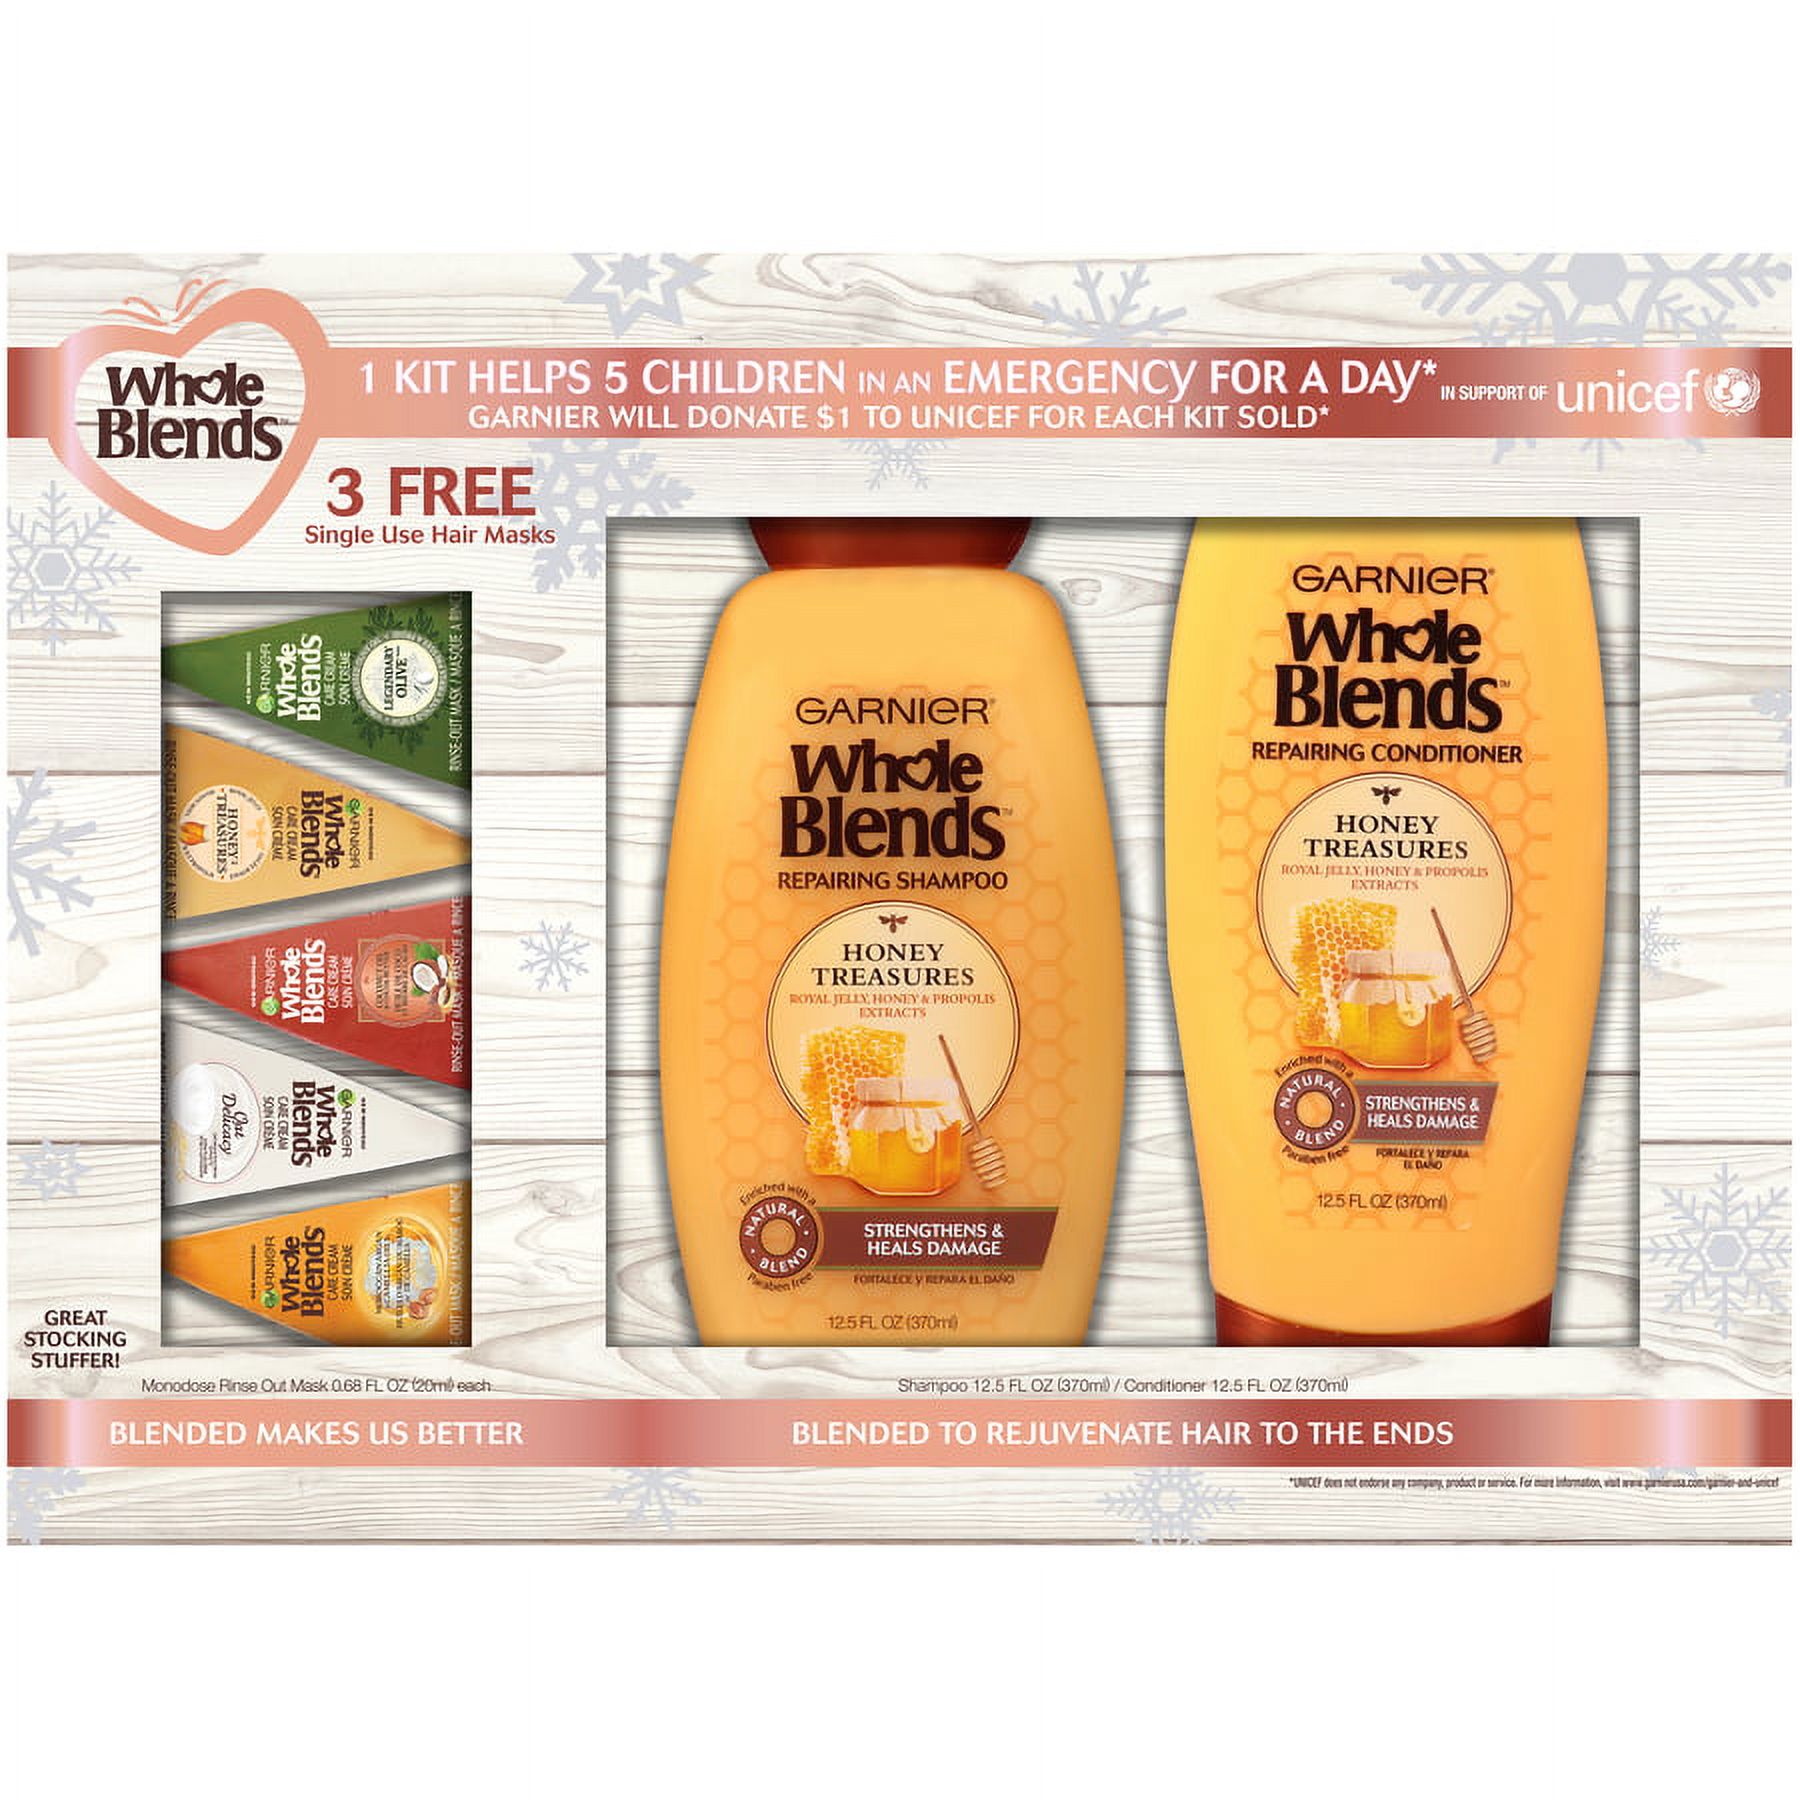 Garnier Whole Blends Honey Treasures Gift Set with 3 Free Hair Masks, 7 Piece Set ($14.29 Value) - image 1 of 6